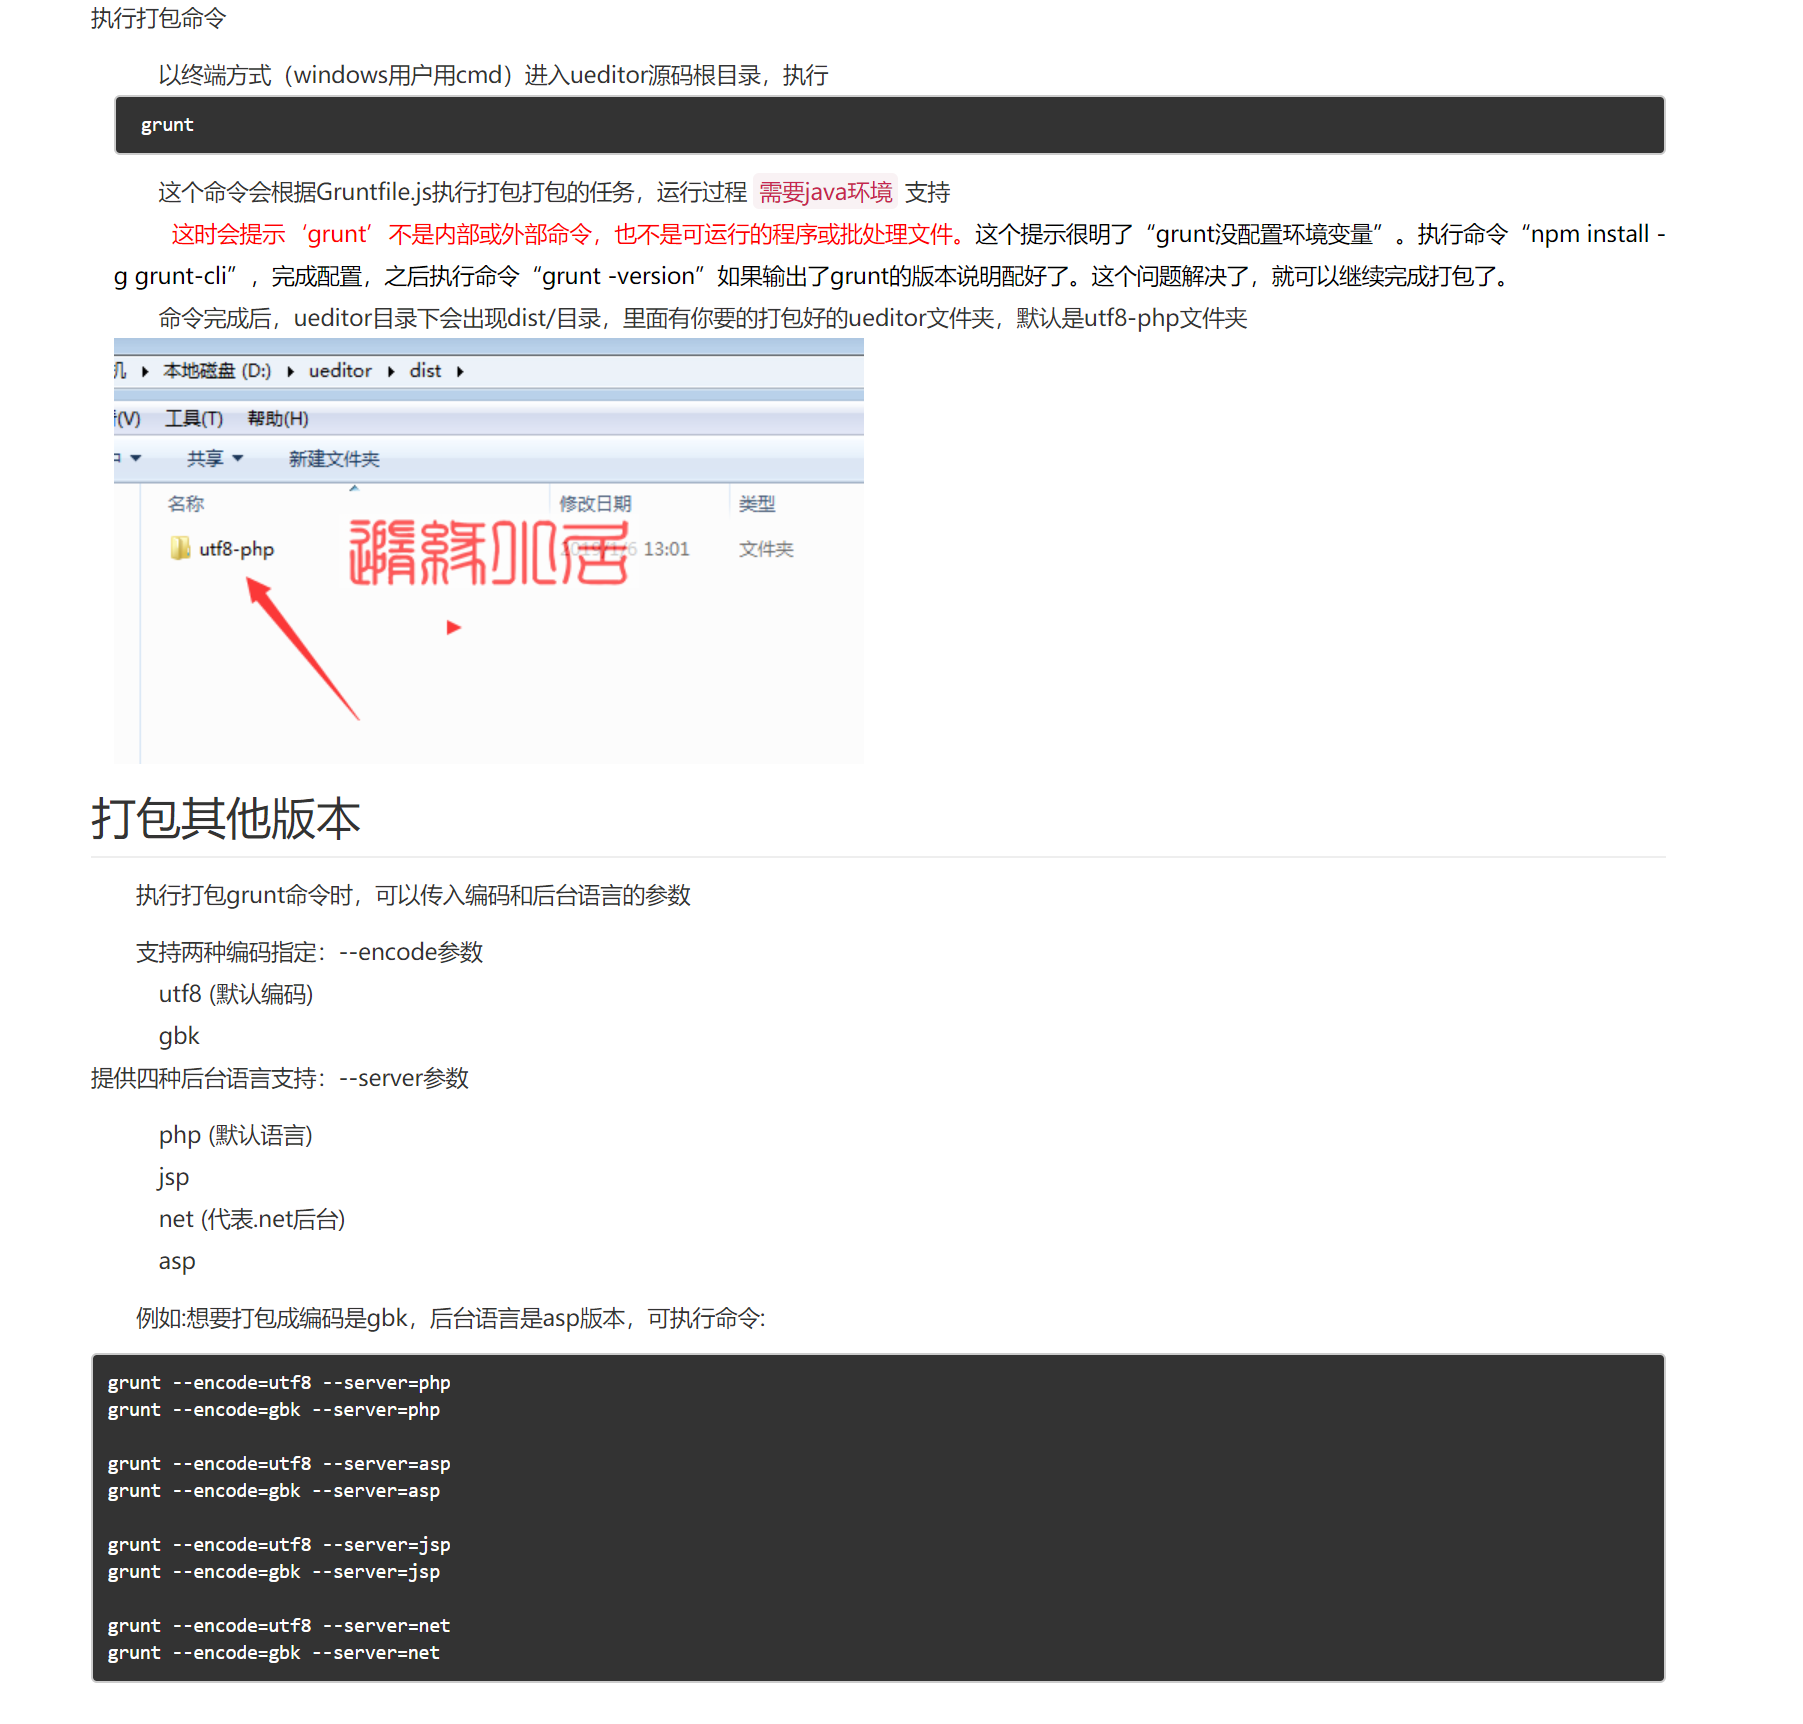 php 百度编辑器ueditor-dev-1.5.0编译版细节流程 - 宋先生日记 - 博客园